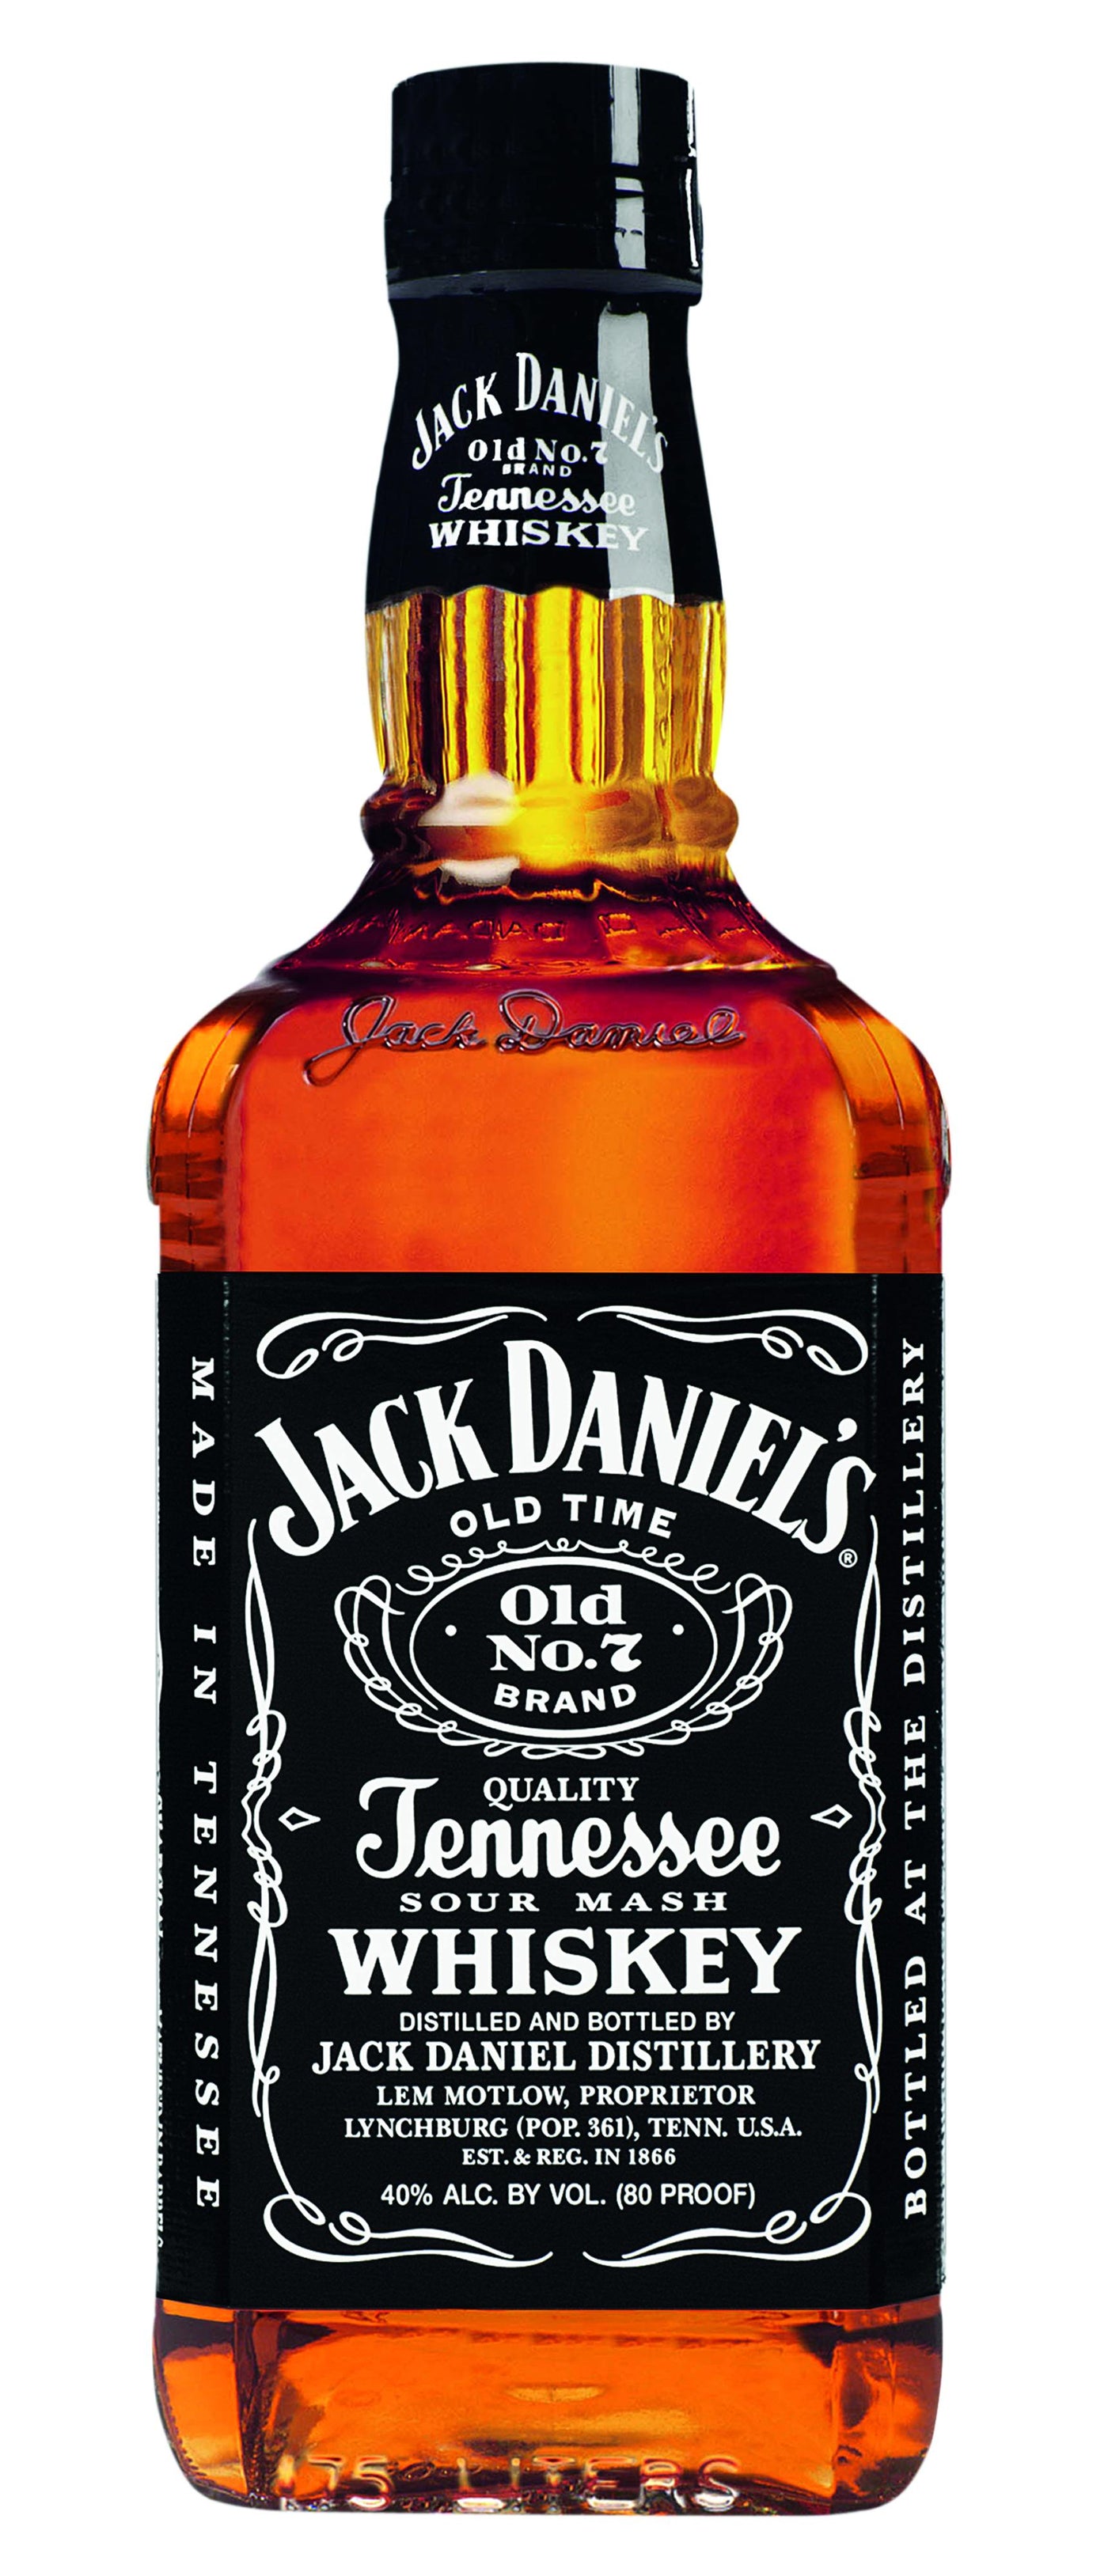 BUY] Jack Daniel's Old No. 7 Black Label Sour Mash Tennessee Whiskey 1.75L  at